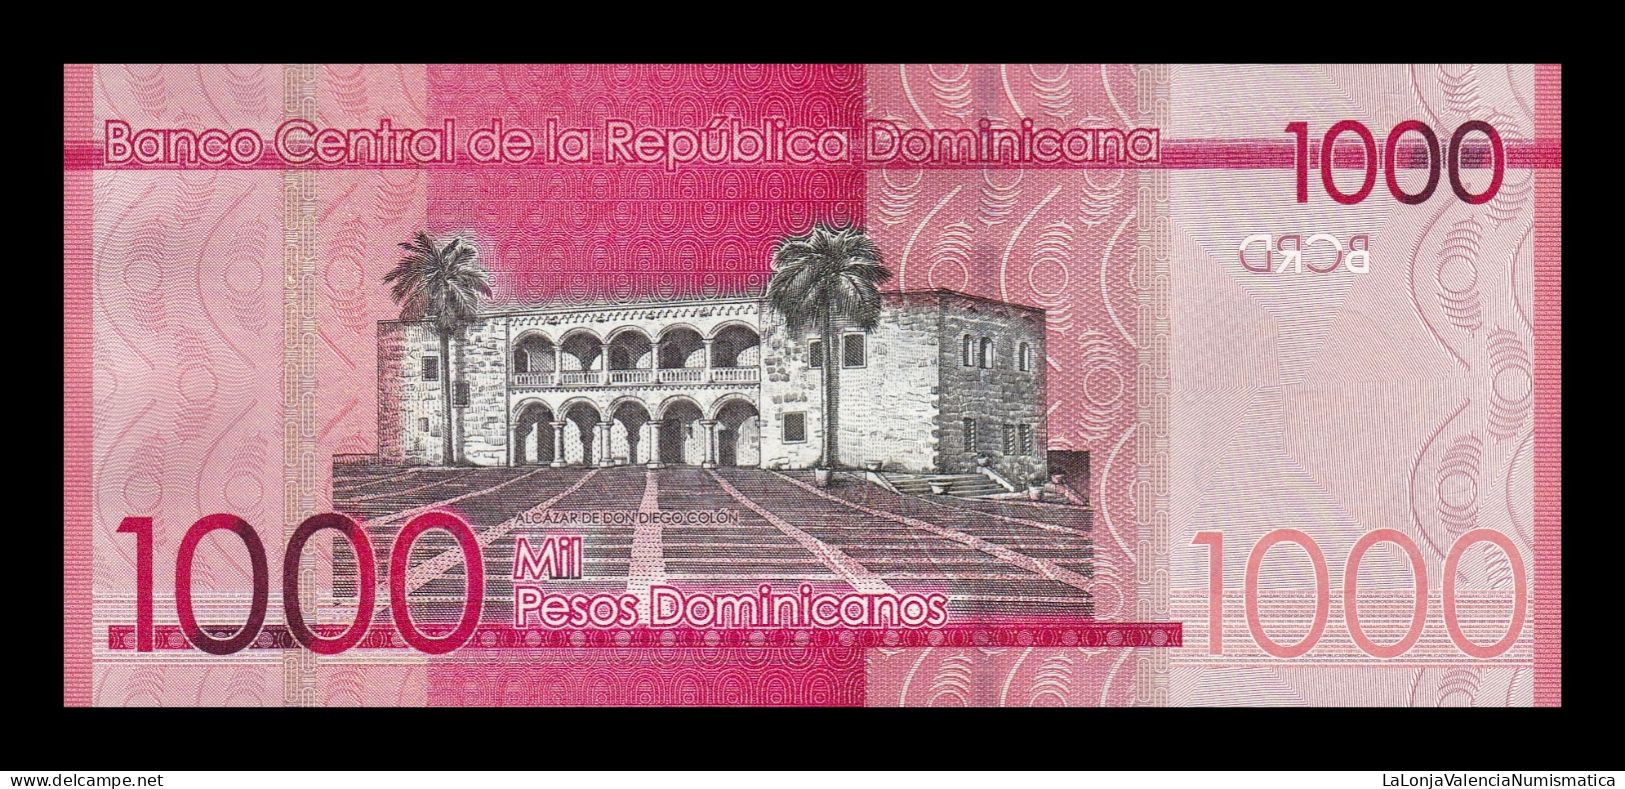 República Dominicana 1000 Pesos Dominicanos 2014 Pick 193a Low Serial 865 Sc Unc - Dominicaine